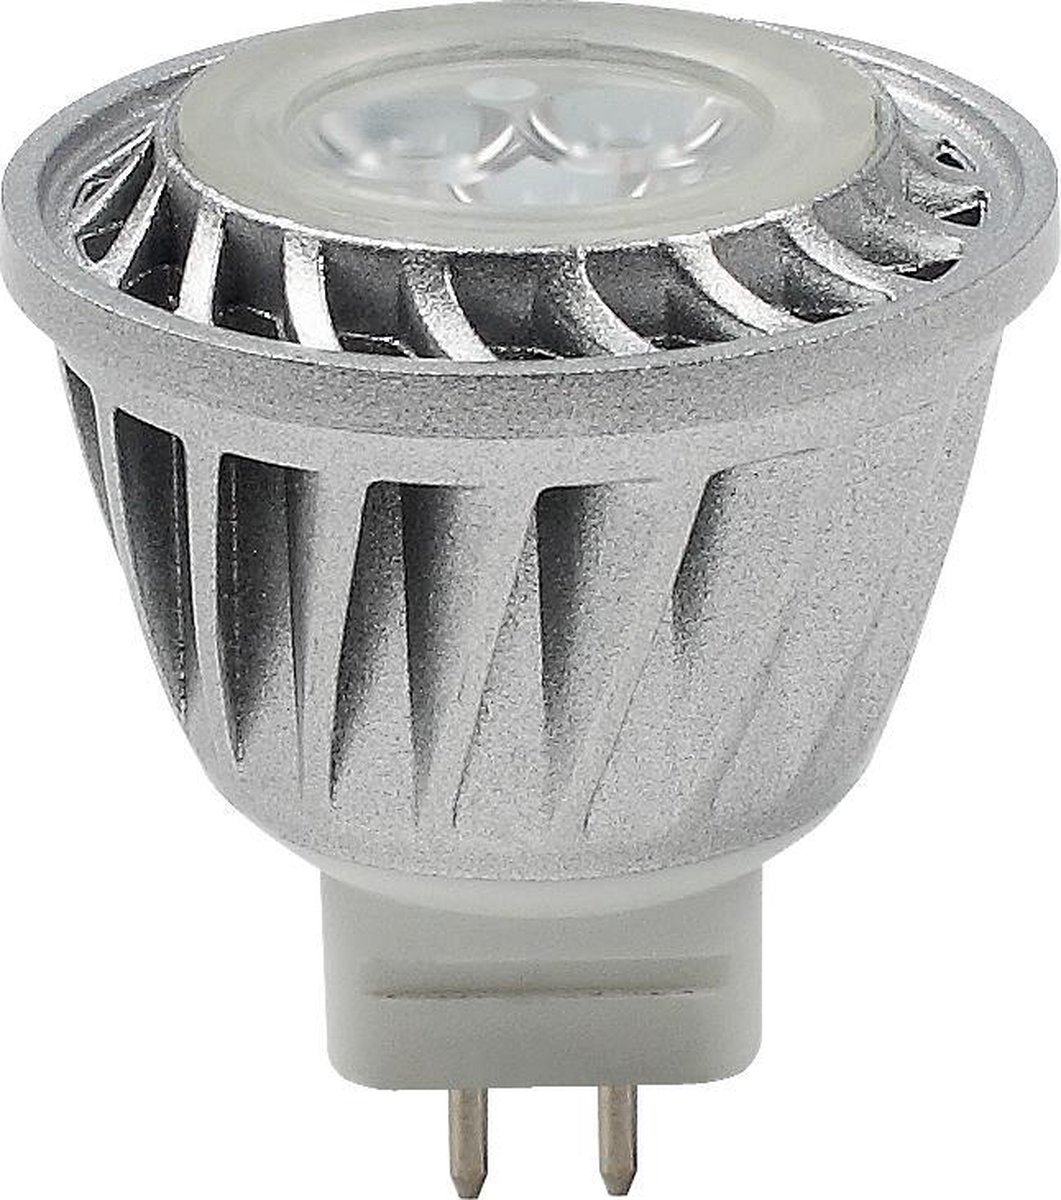 gloeilamp zone varkensvlees MR11 (dia. 35mm) - LED Spotje - Laag Volt 12V - 4W (vervangt 20W halogeen  spot lamp) -... | bol.com